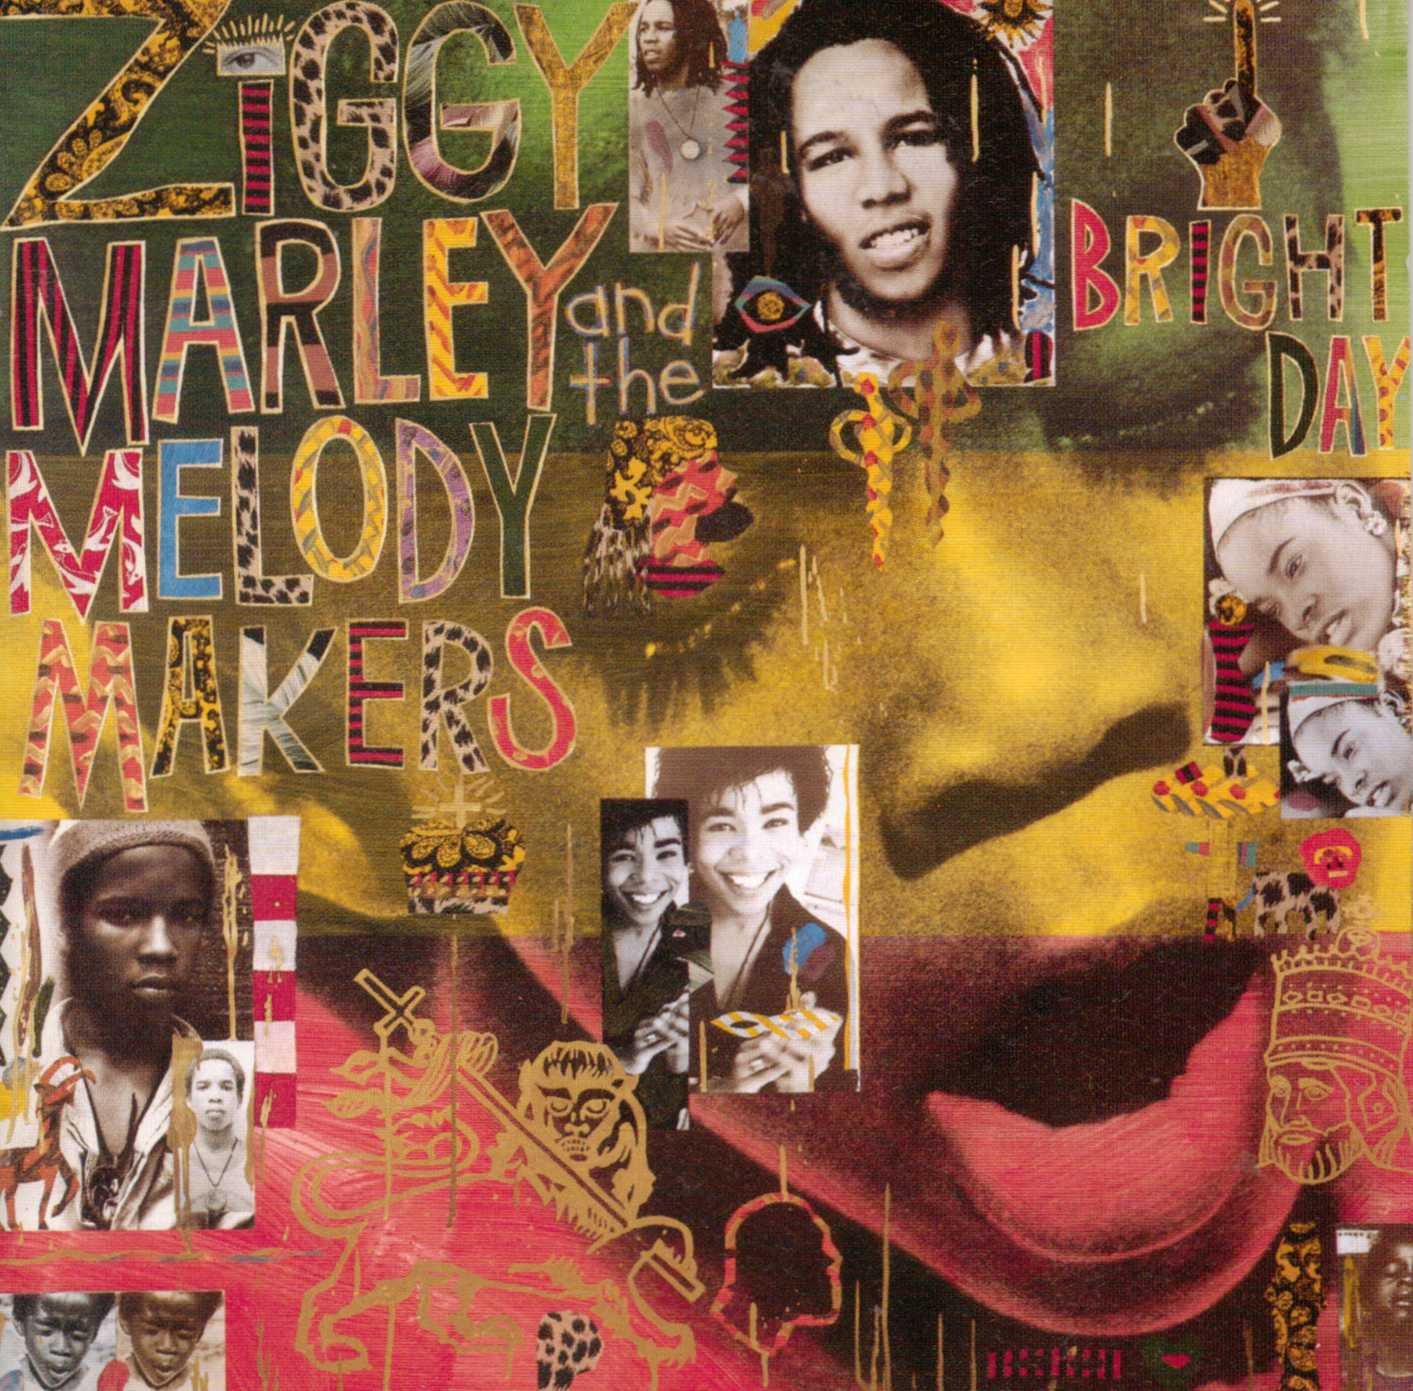 Ziggy Marley - One Bright Day LP